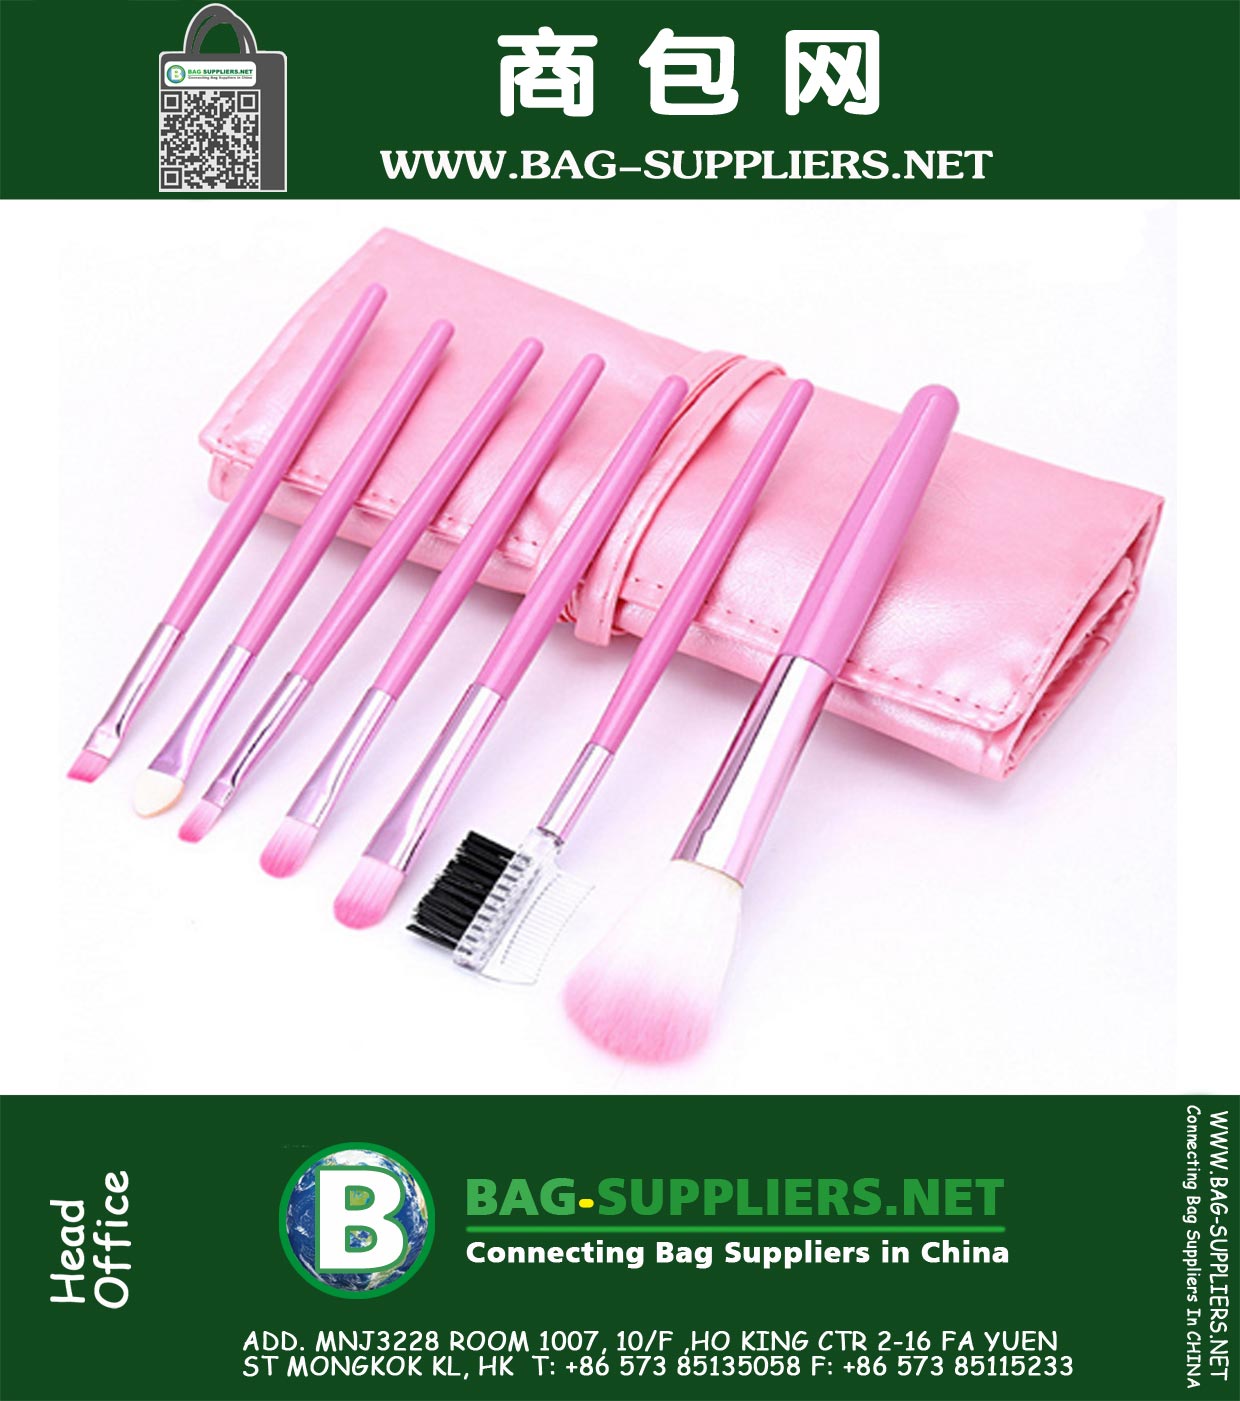 7 PCS Makeup Brushes Pink Leather Bag Set, Professional Face And Eye Shadow Brush Beauty Tool Makeup Kits